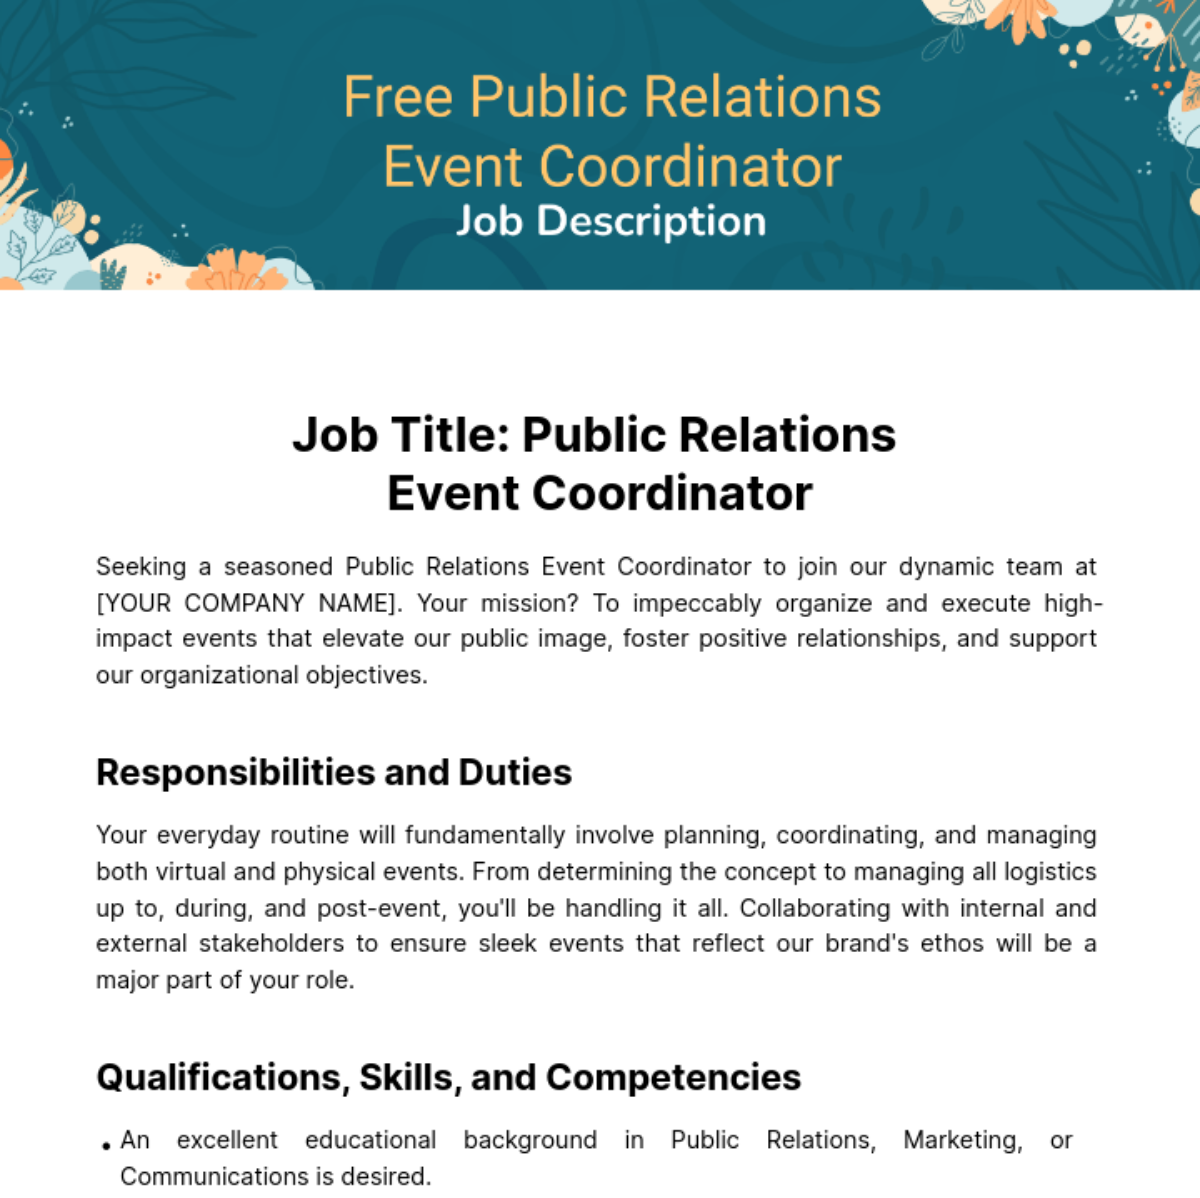 Public Relations (PR) Event Coordinator Job Description Template